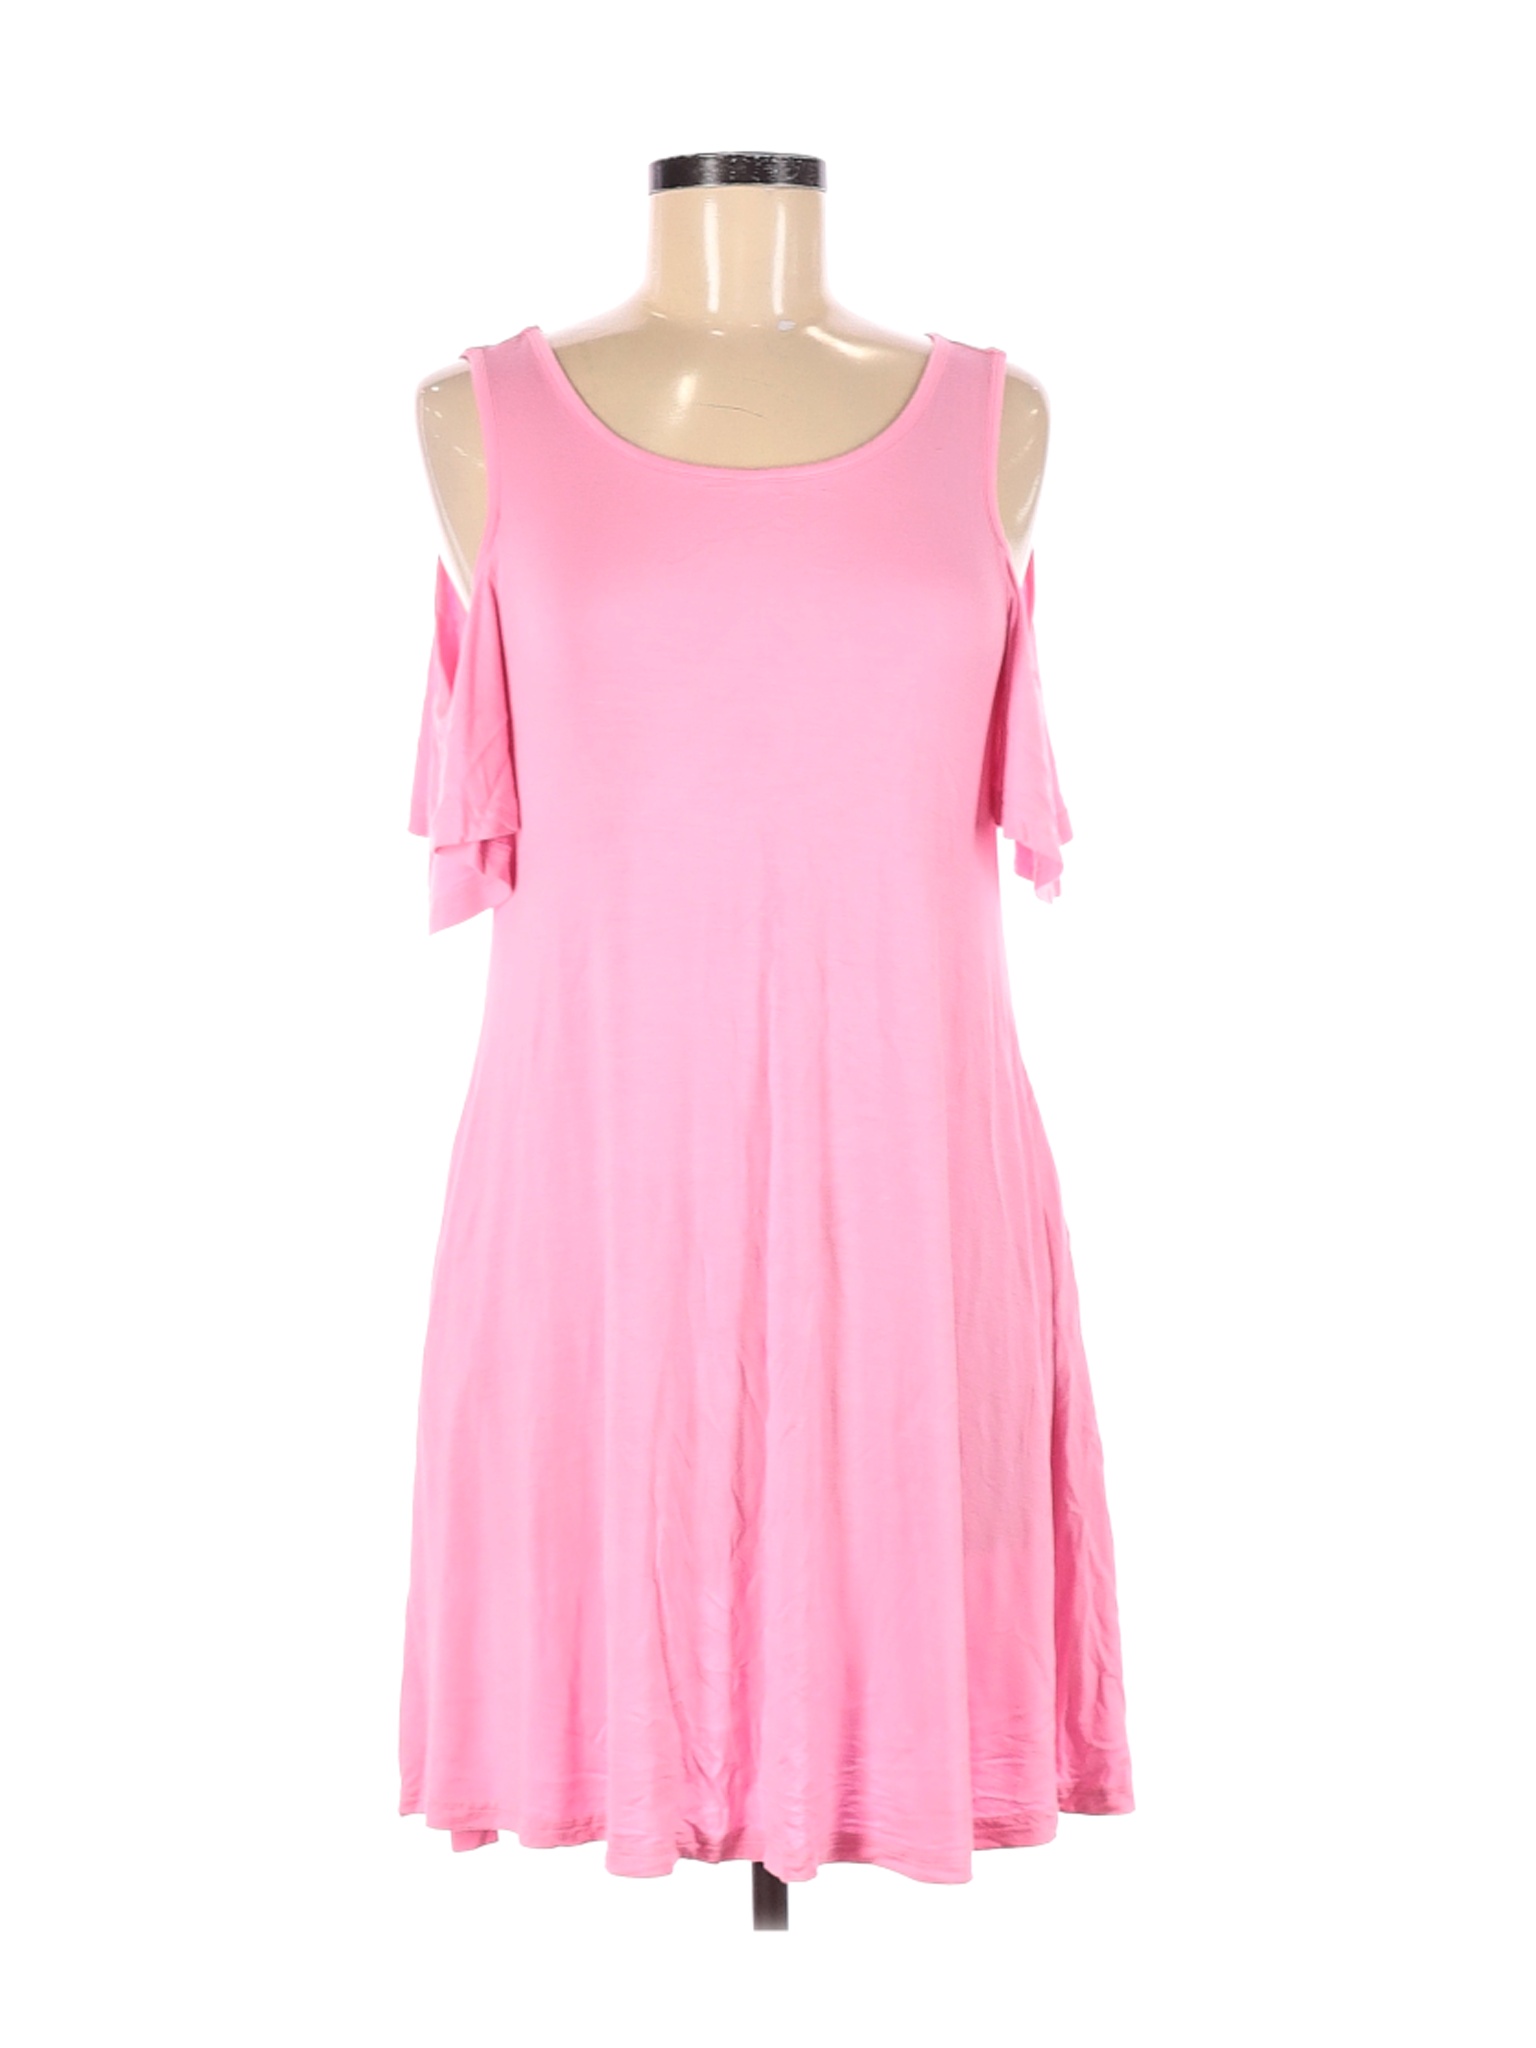 Unbranded Women Pink Casual Dress M | eBay